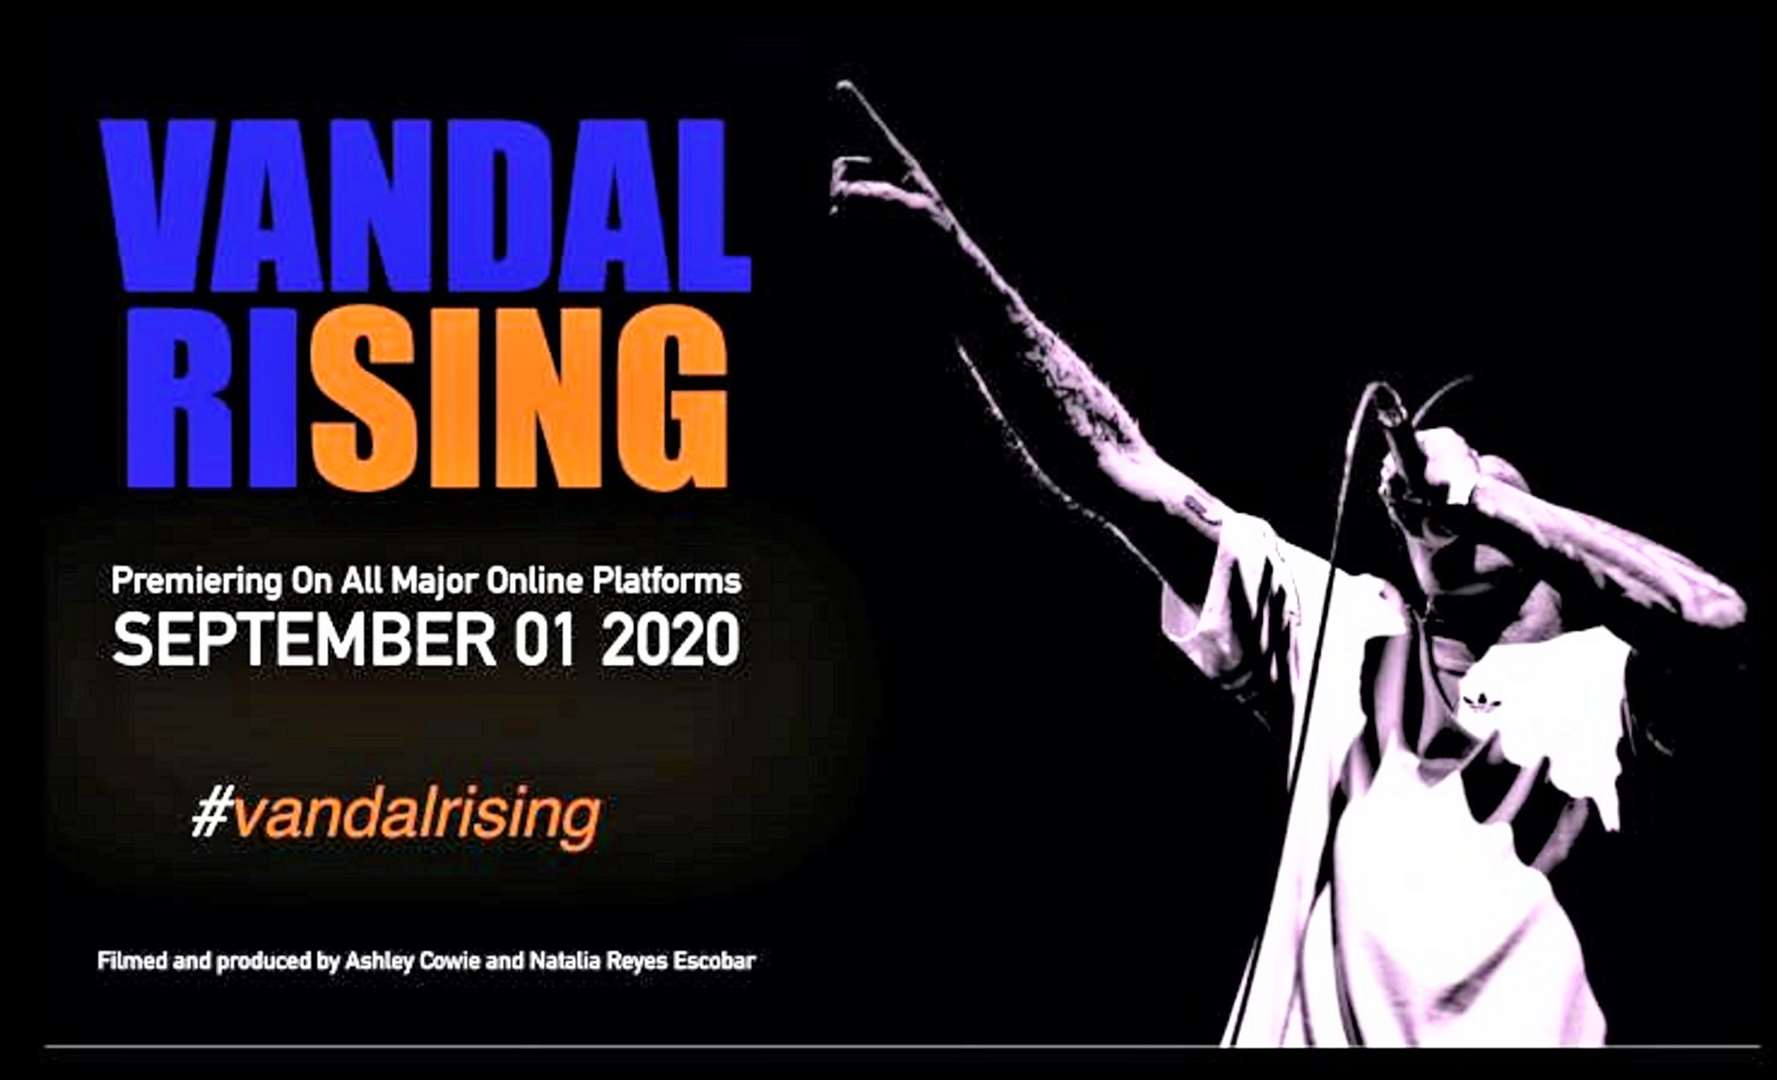 Vandal Rising poster advertsing the new documentary.